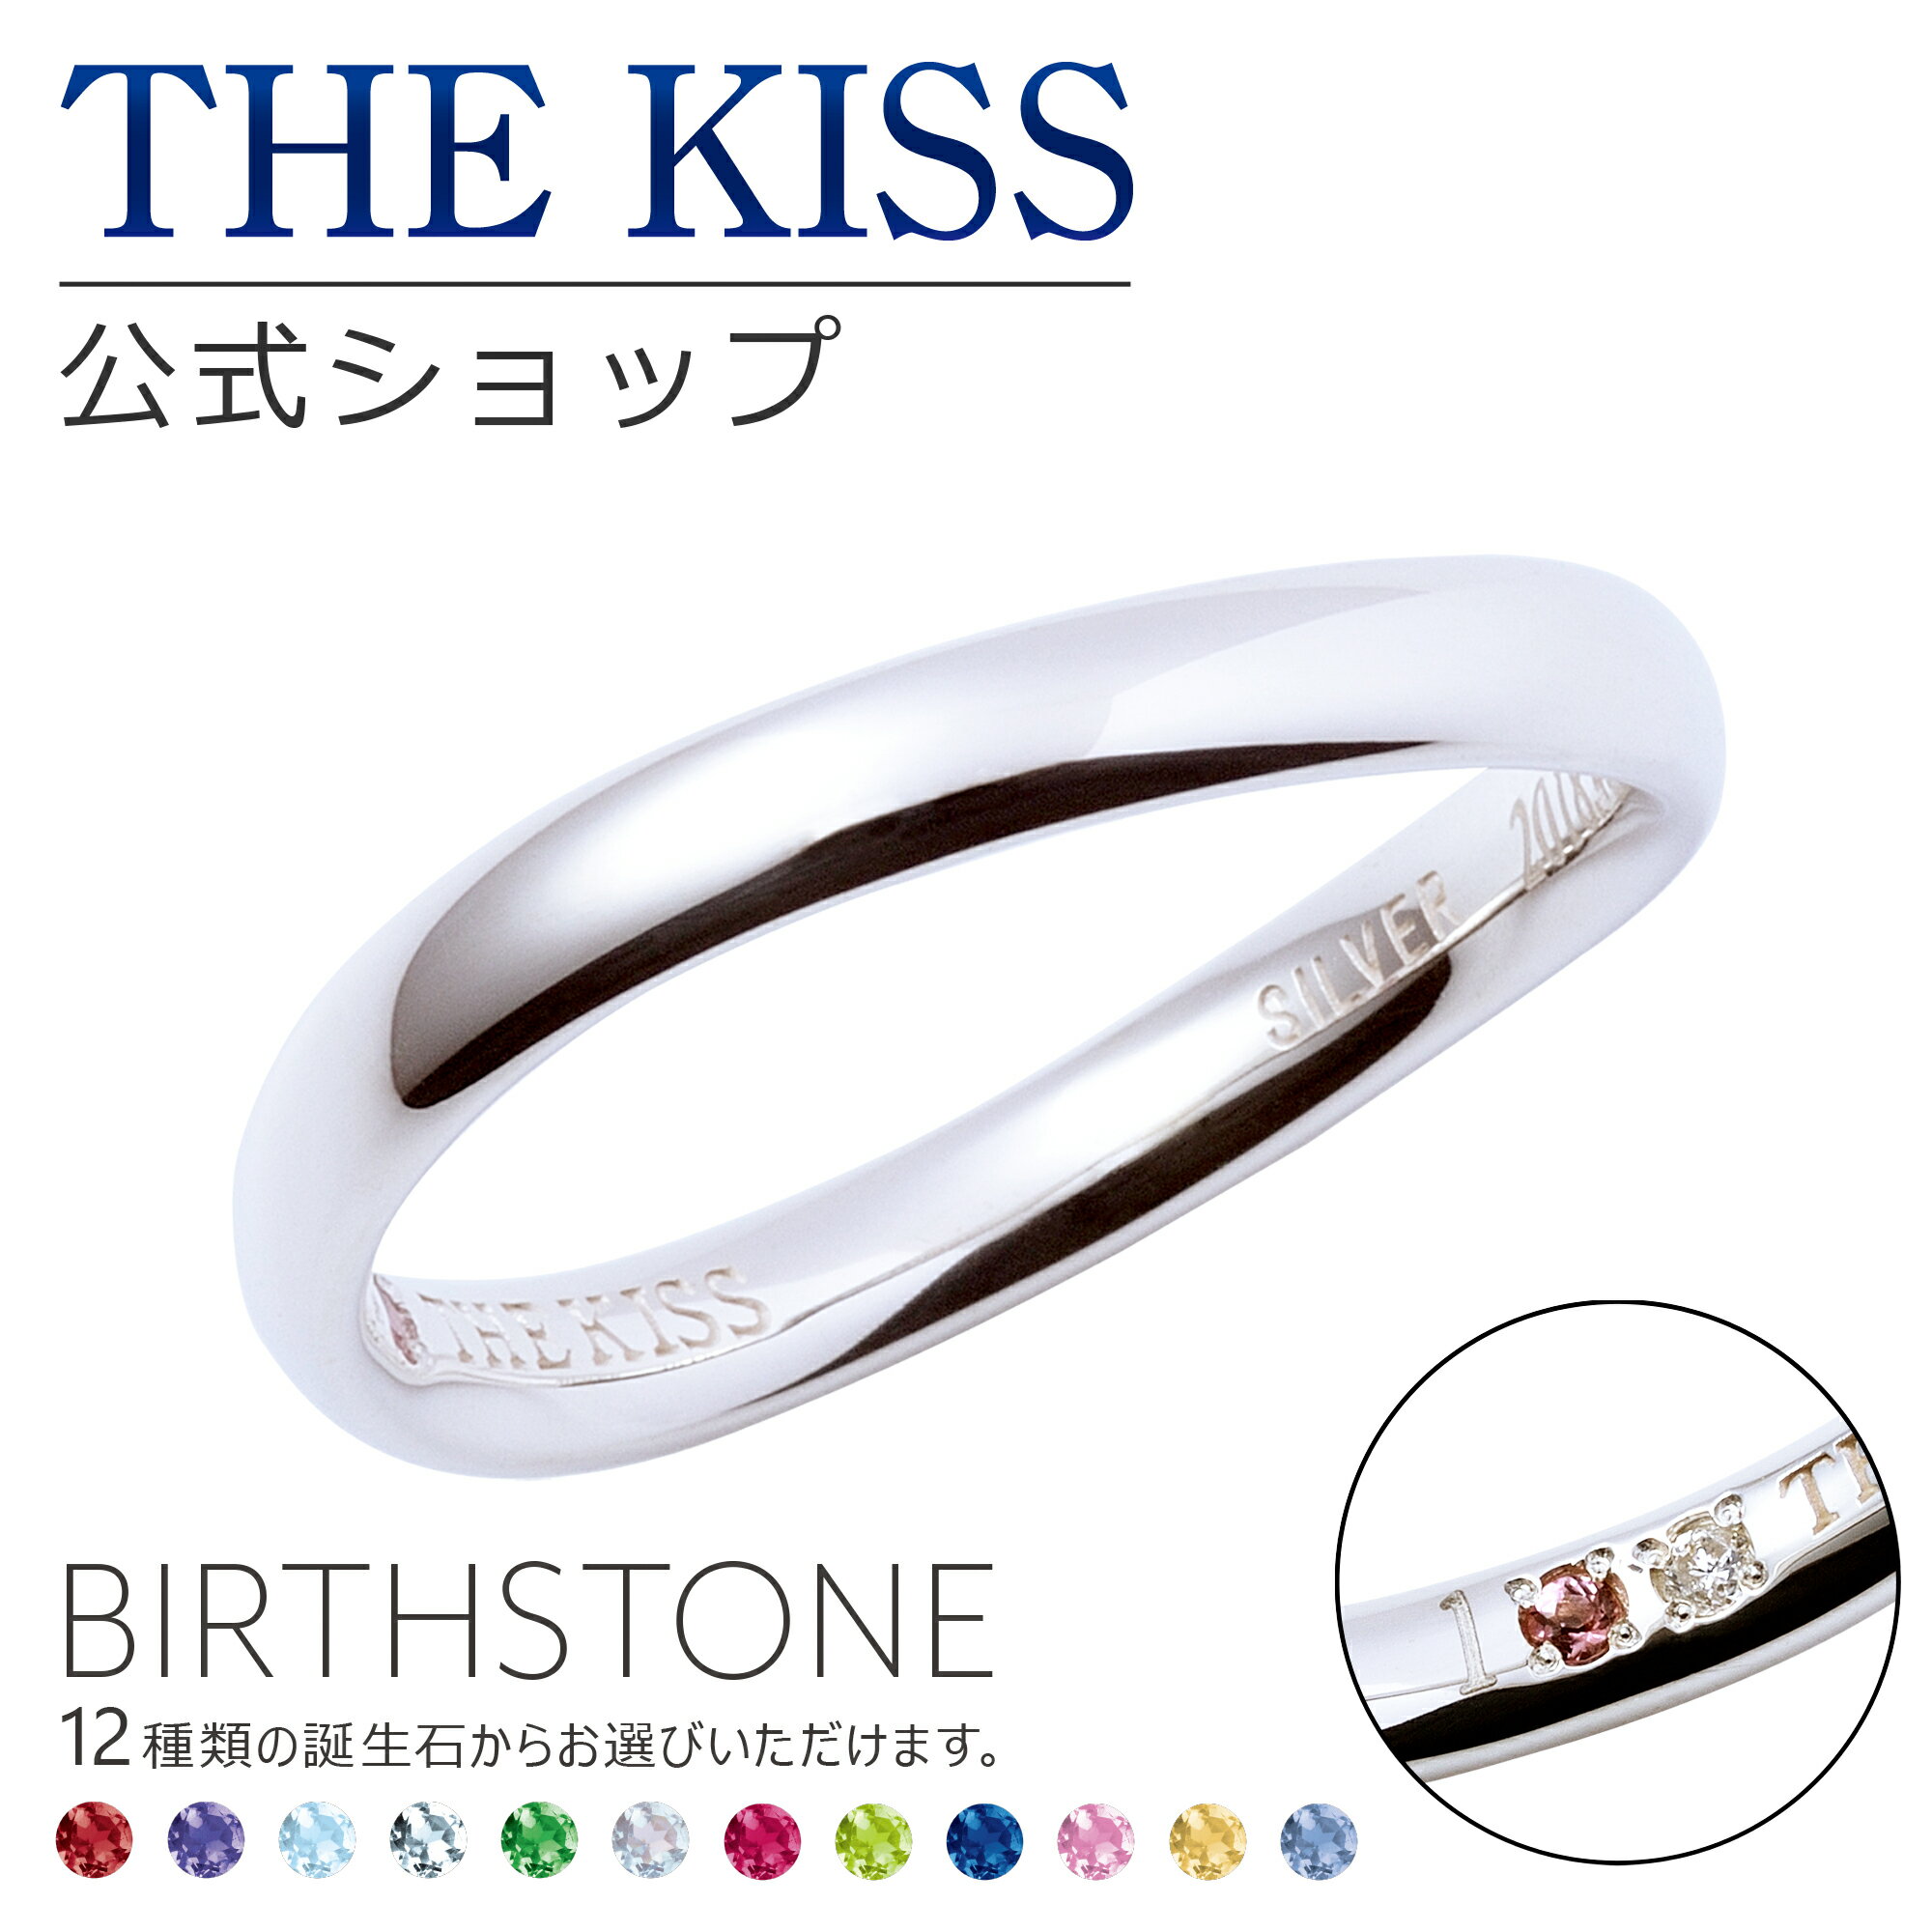 THE KISS 公式ショップ セミオーダー シルバー ペアリング オーダーメイド 偶数 レディース メンズ 単品 ペアアクセサリー カップル 人気 ブランド ペア 指輪 誕生石 バースデーストーン 母の日